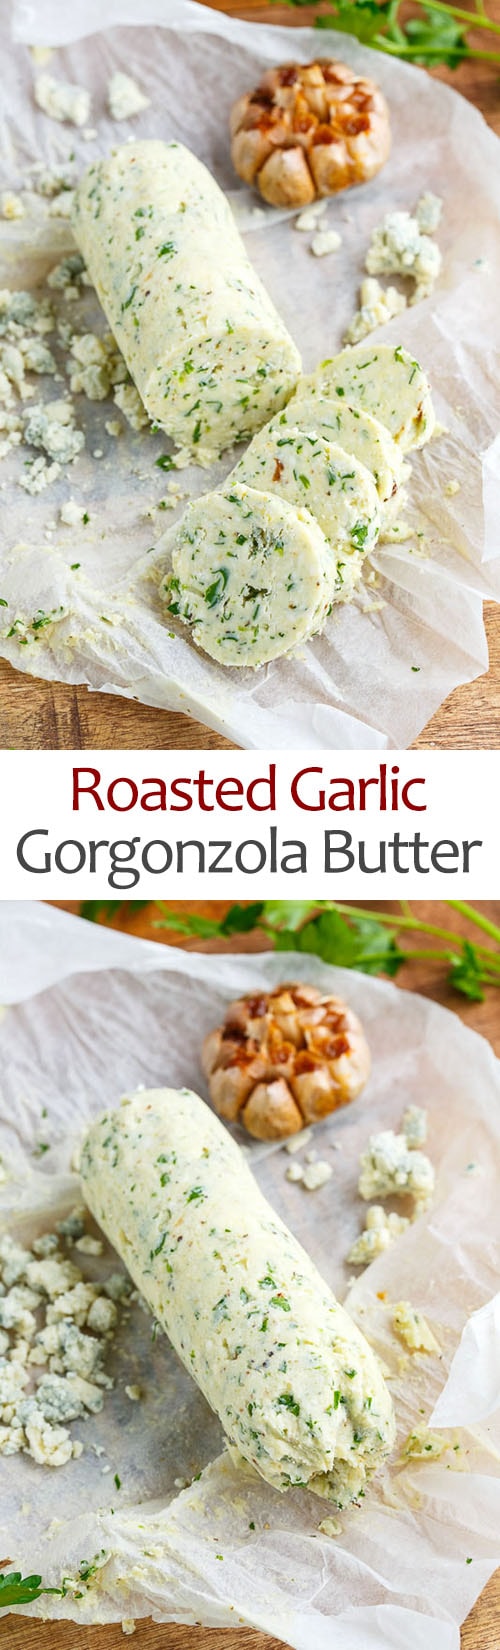 Roasted Garlic Gorgonzola Butter